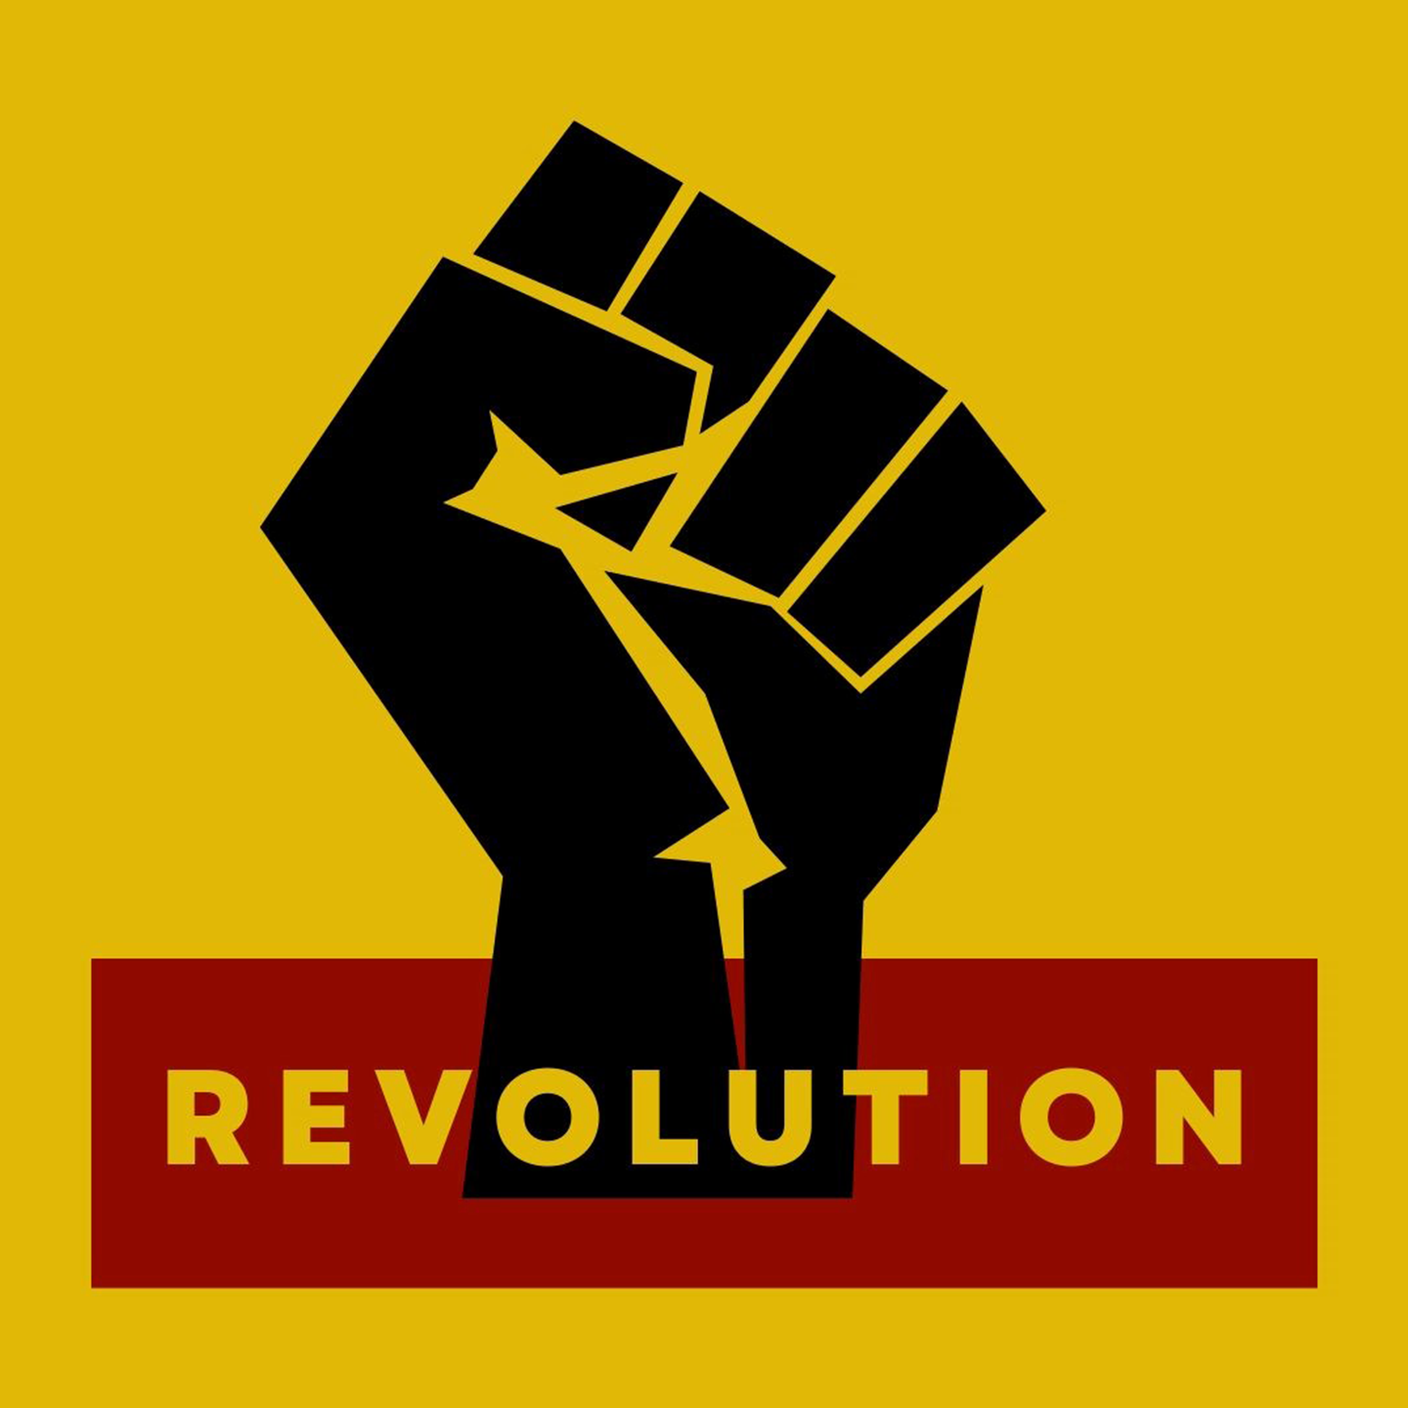 img_16x9-Revolution.png